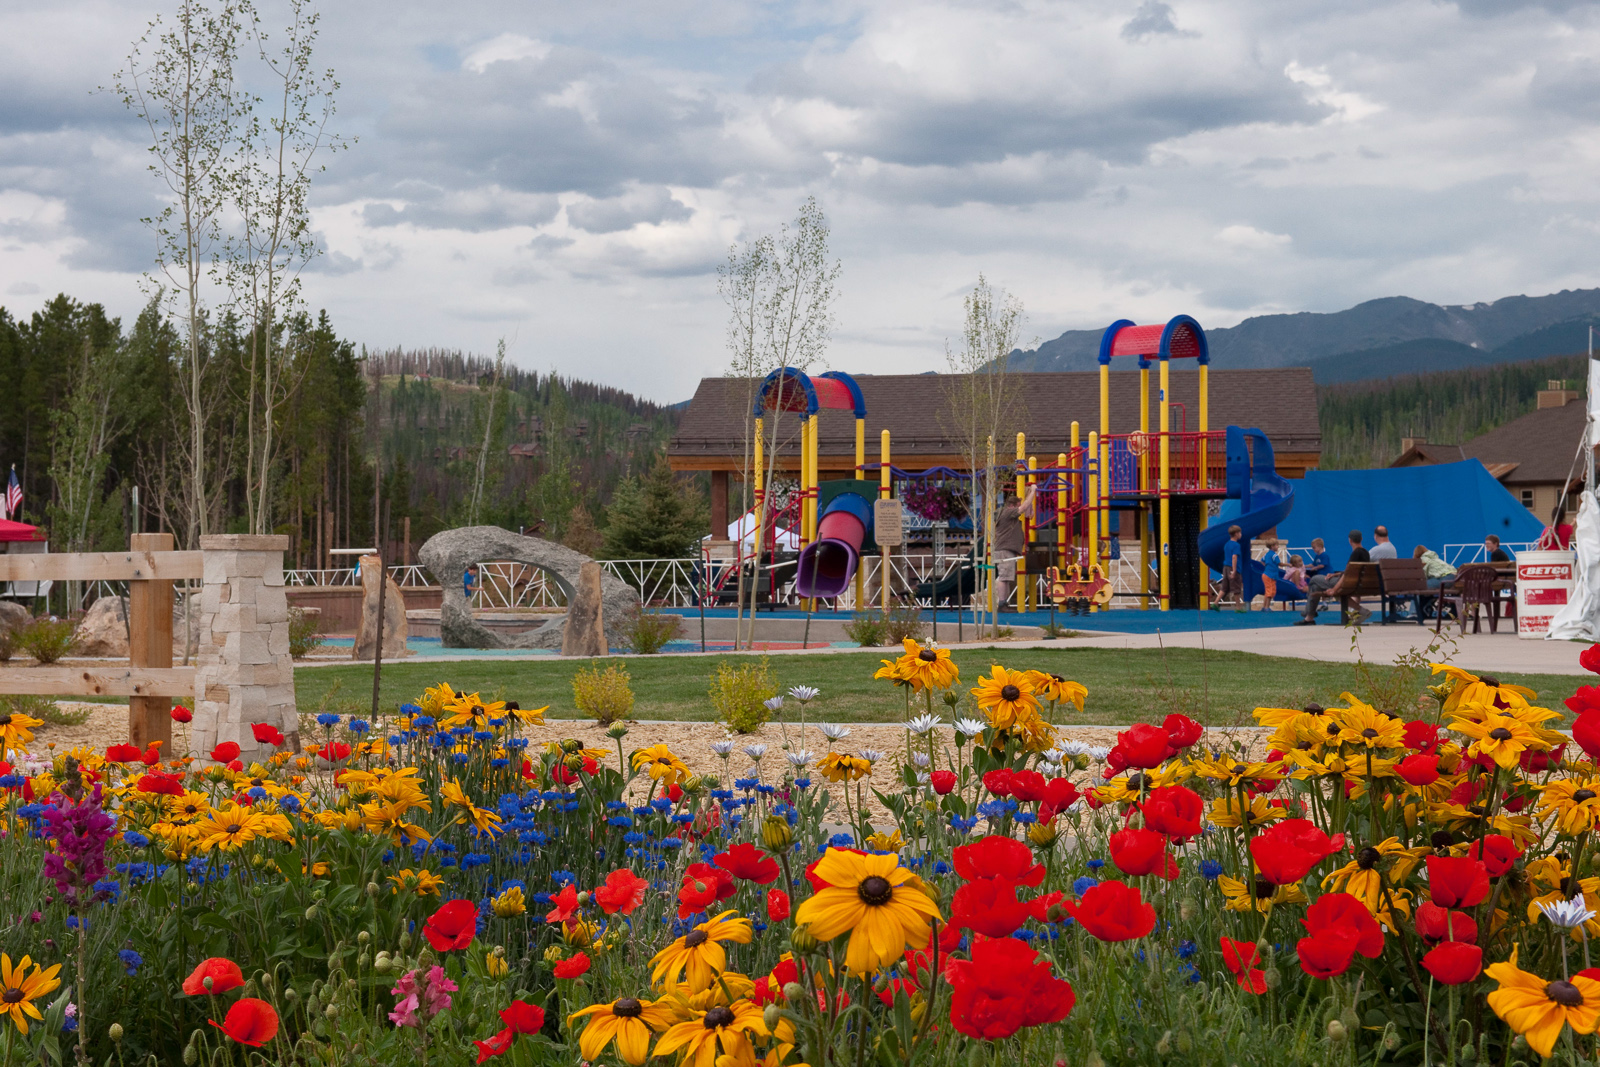 Flowers and playground